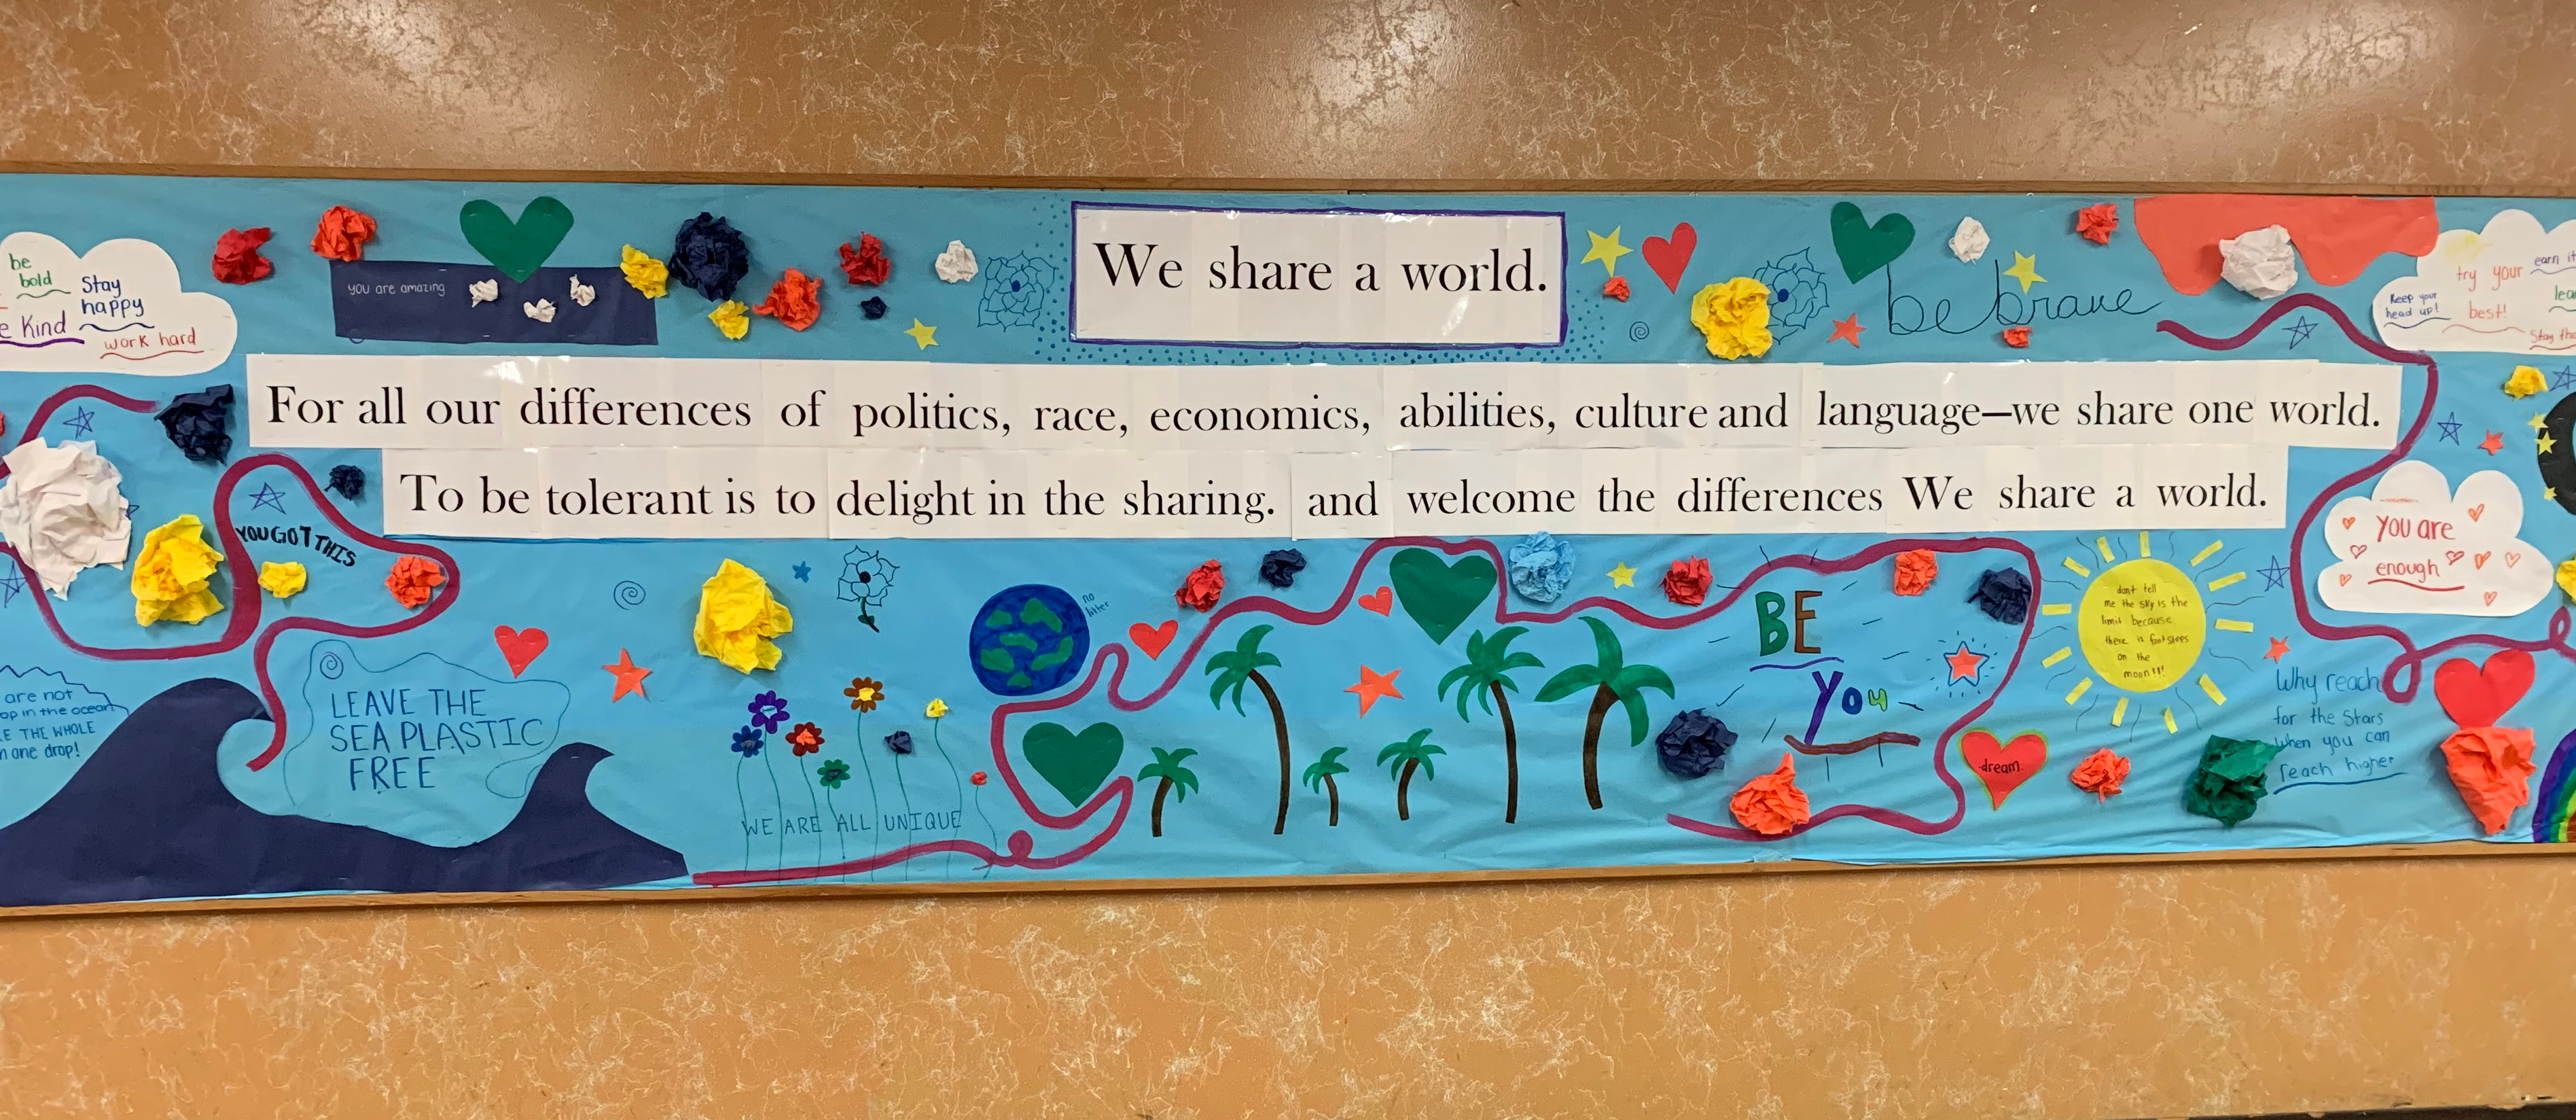 Portsmouth Middle School celebrates diversity.